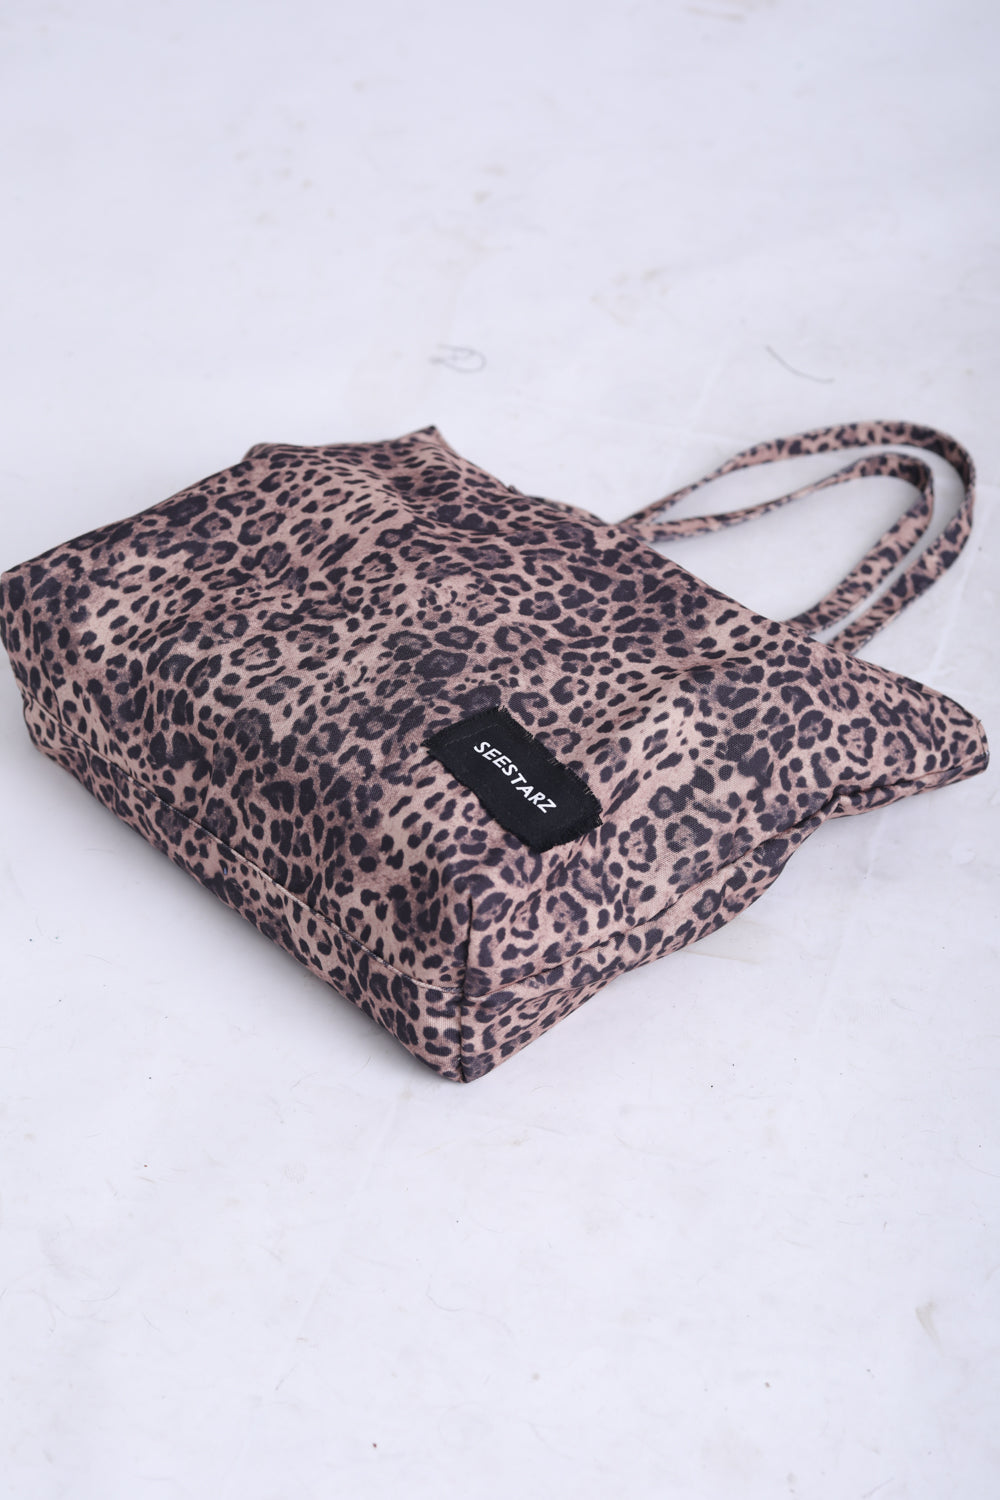 SEESTARZ Leopard Bag